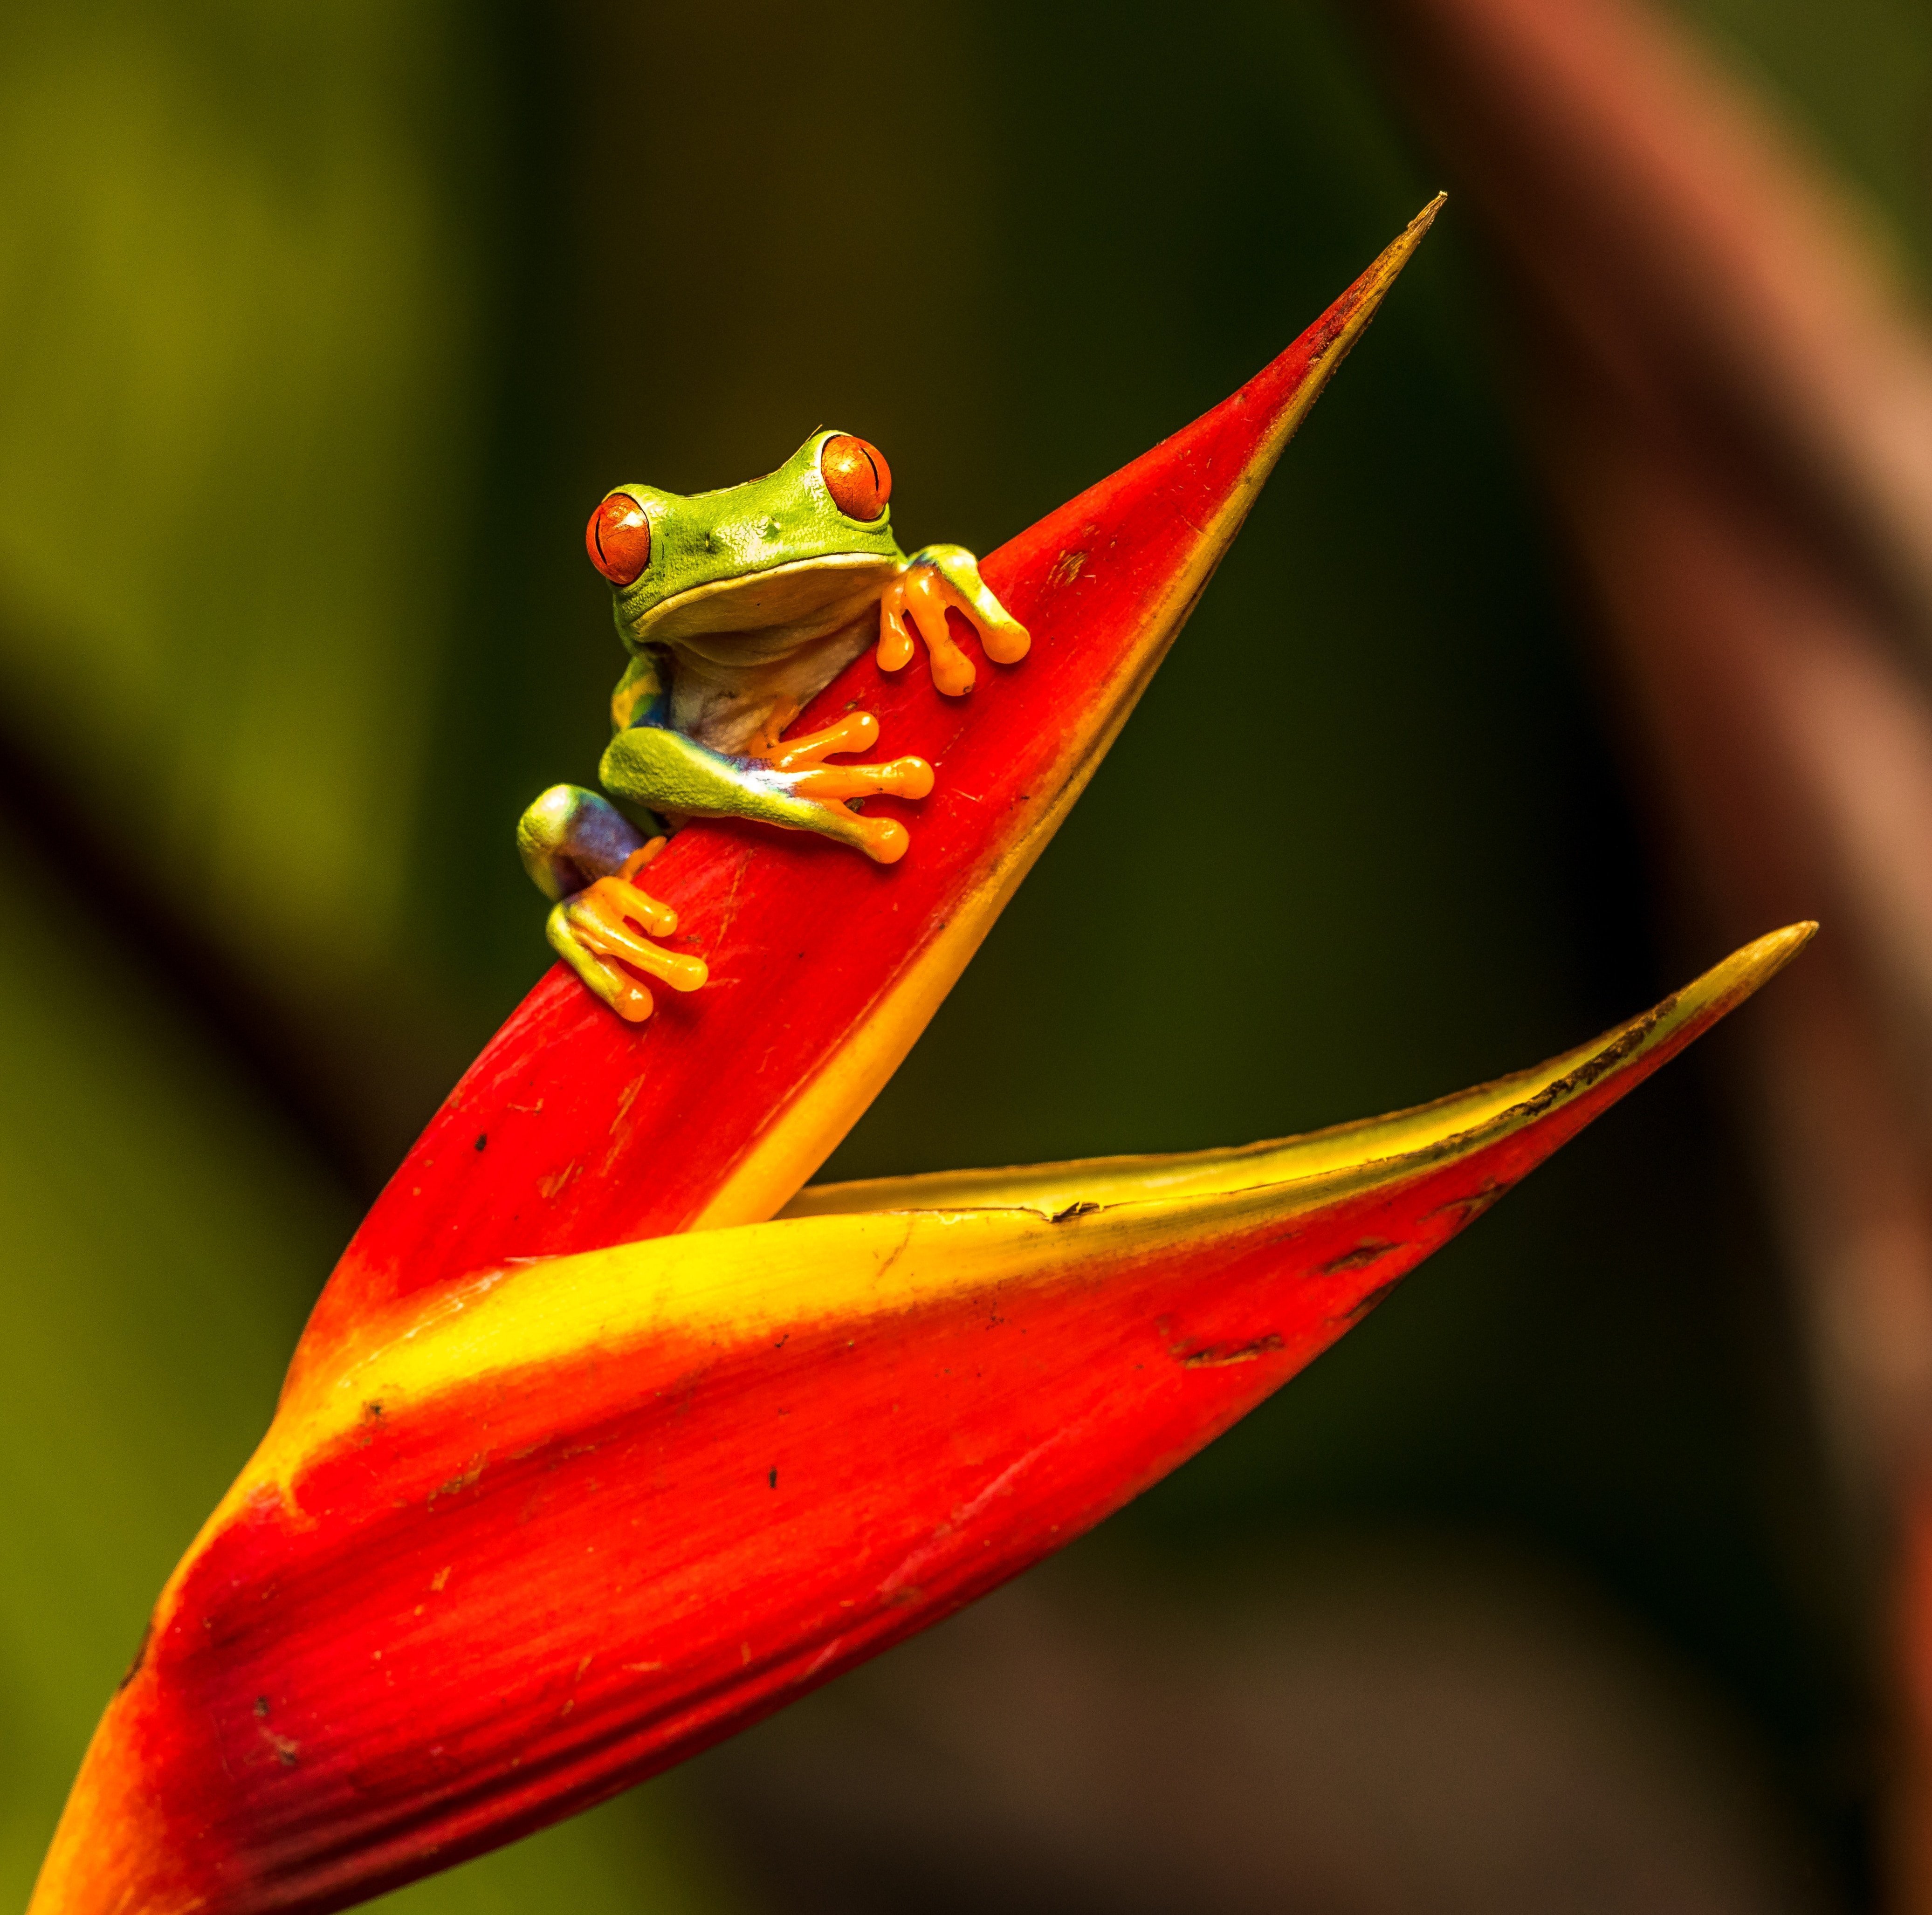 A frog sitting on a plant. | Source: Unsplash